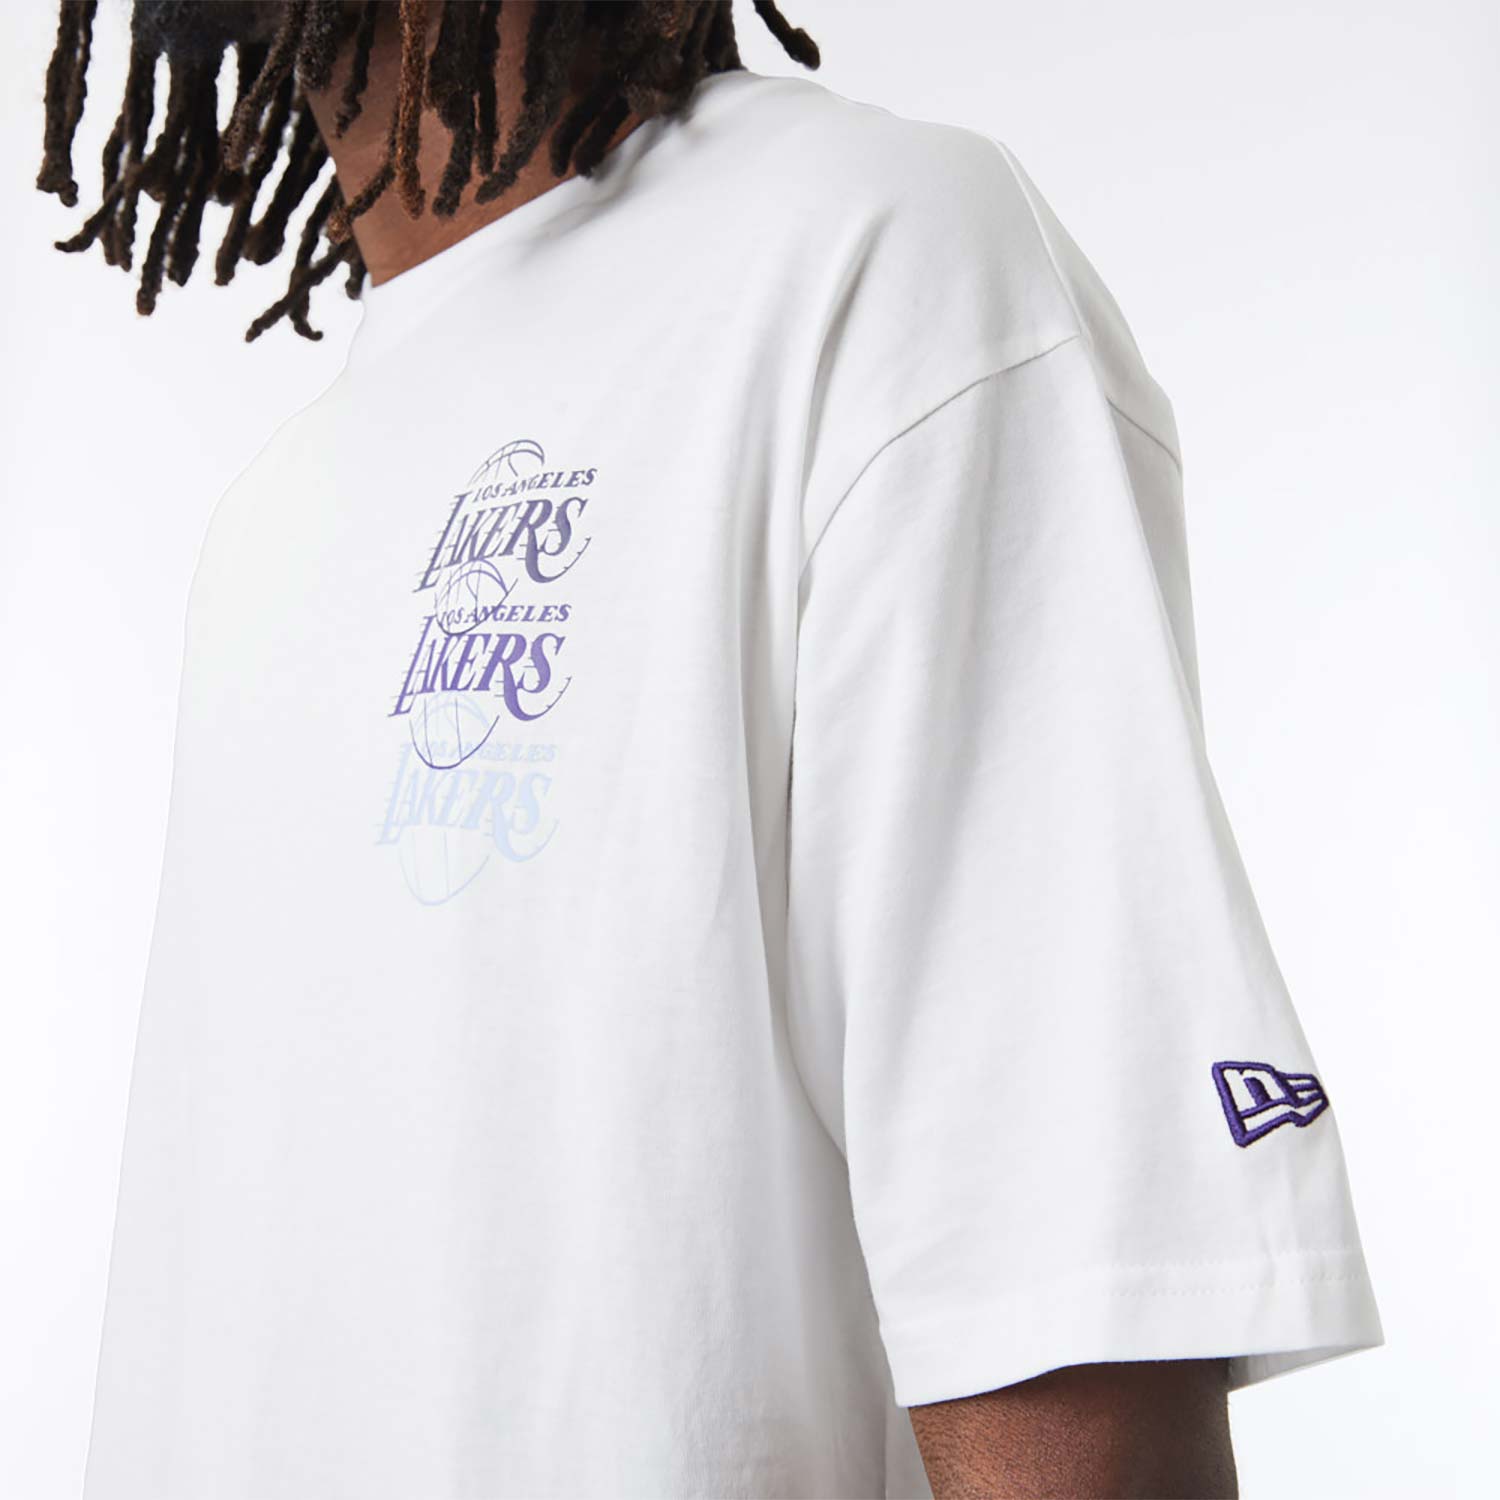 T-Shirt oversize LA Lakers NBA Stacked bianca 